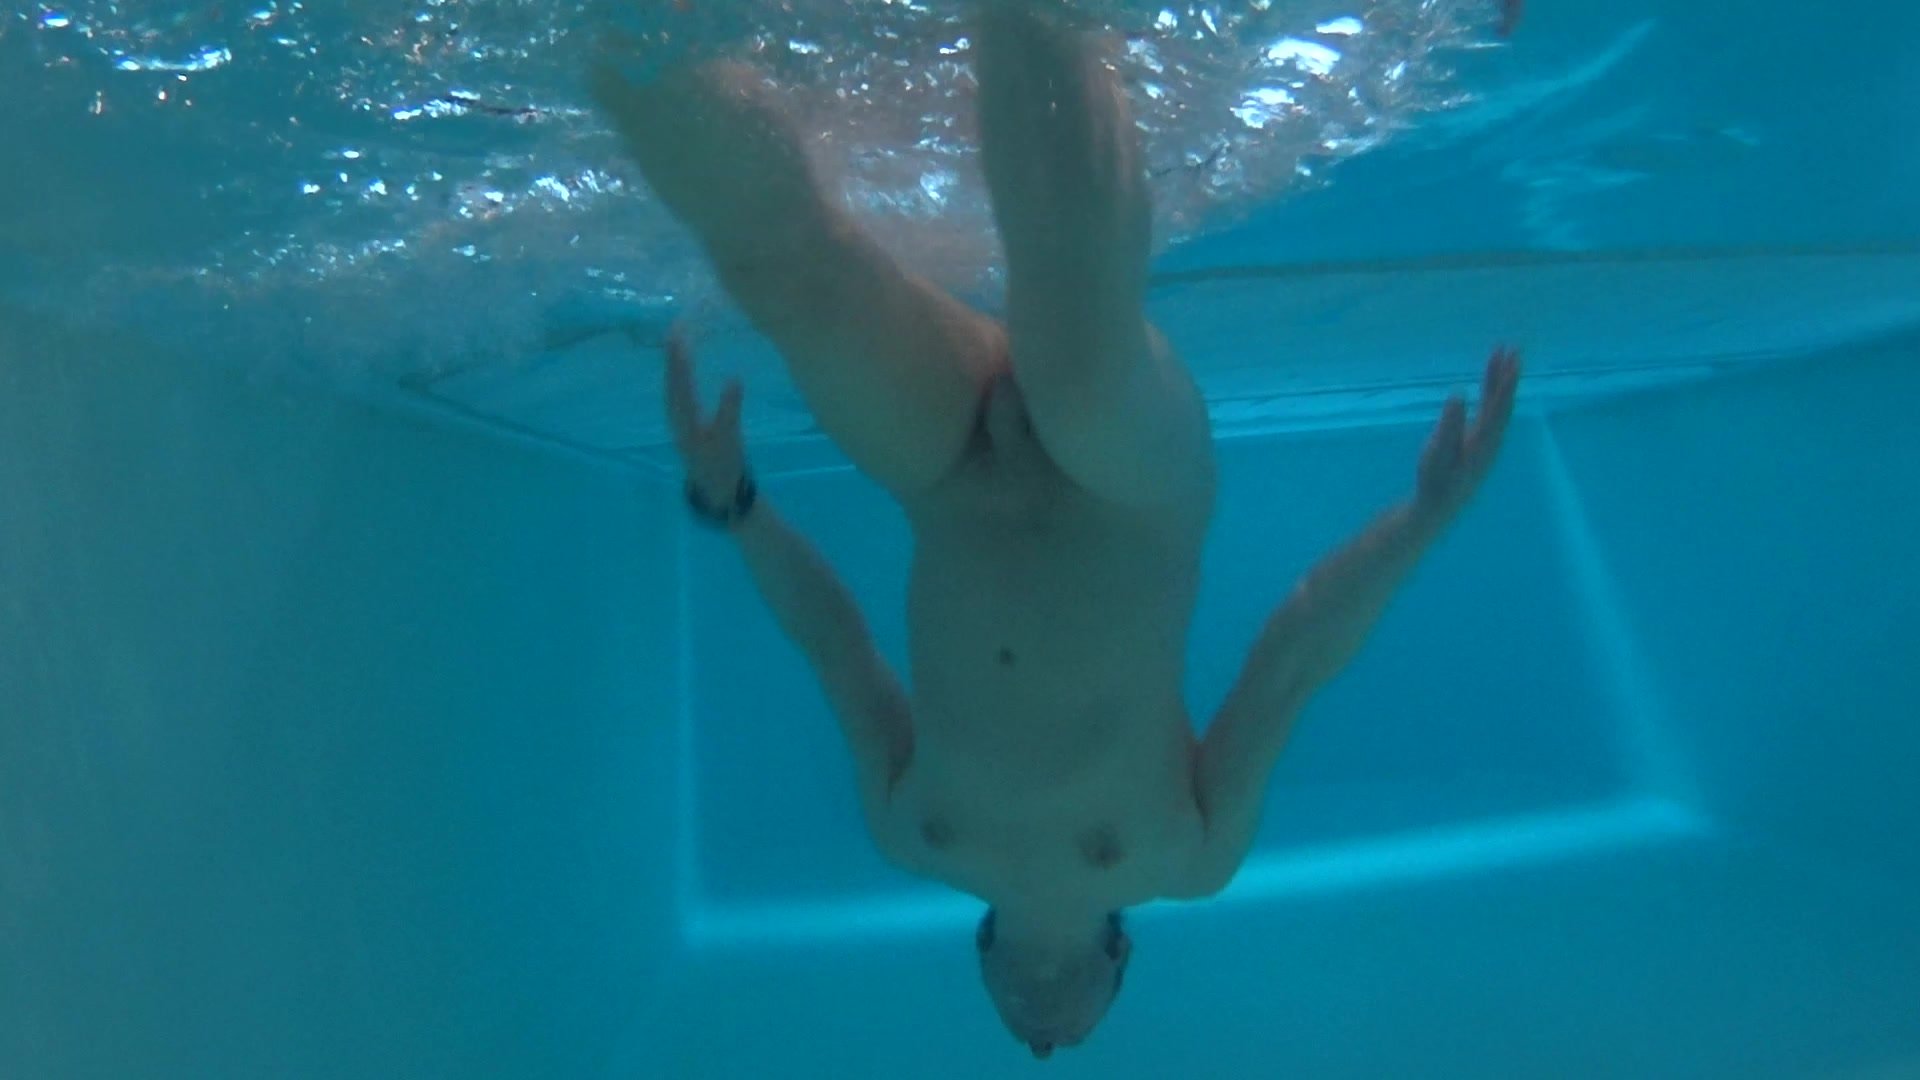 swimming nude in pool underwater